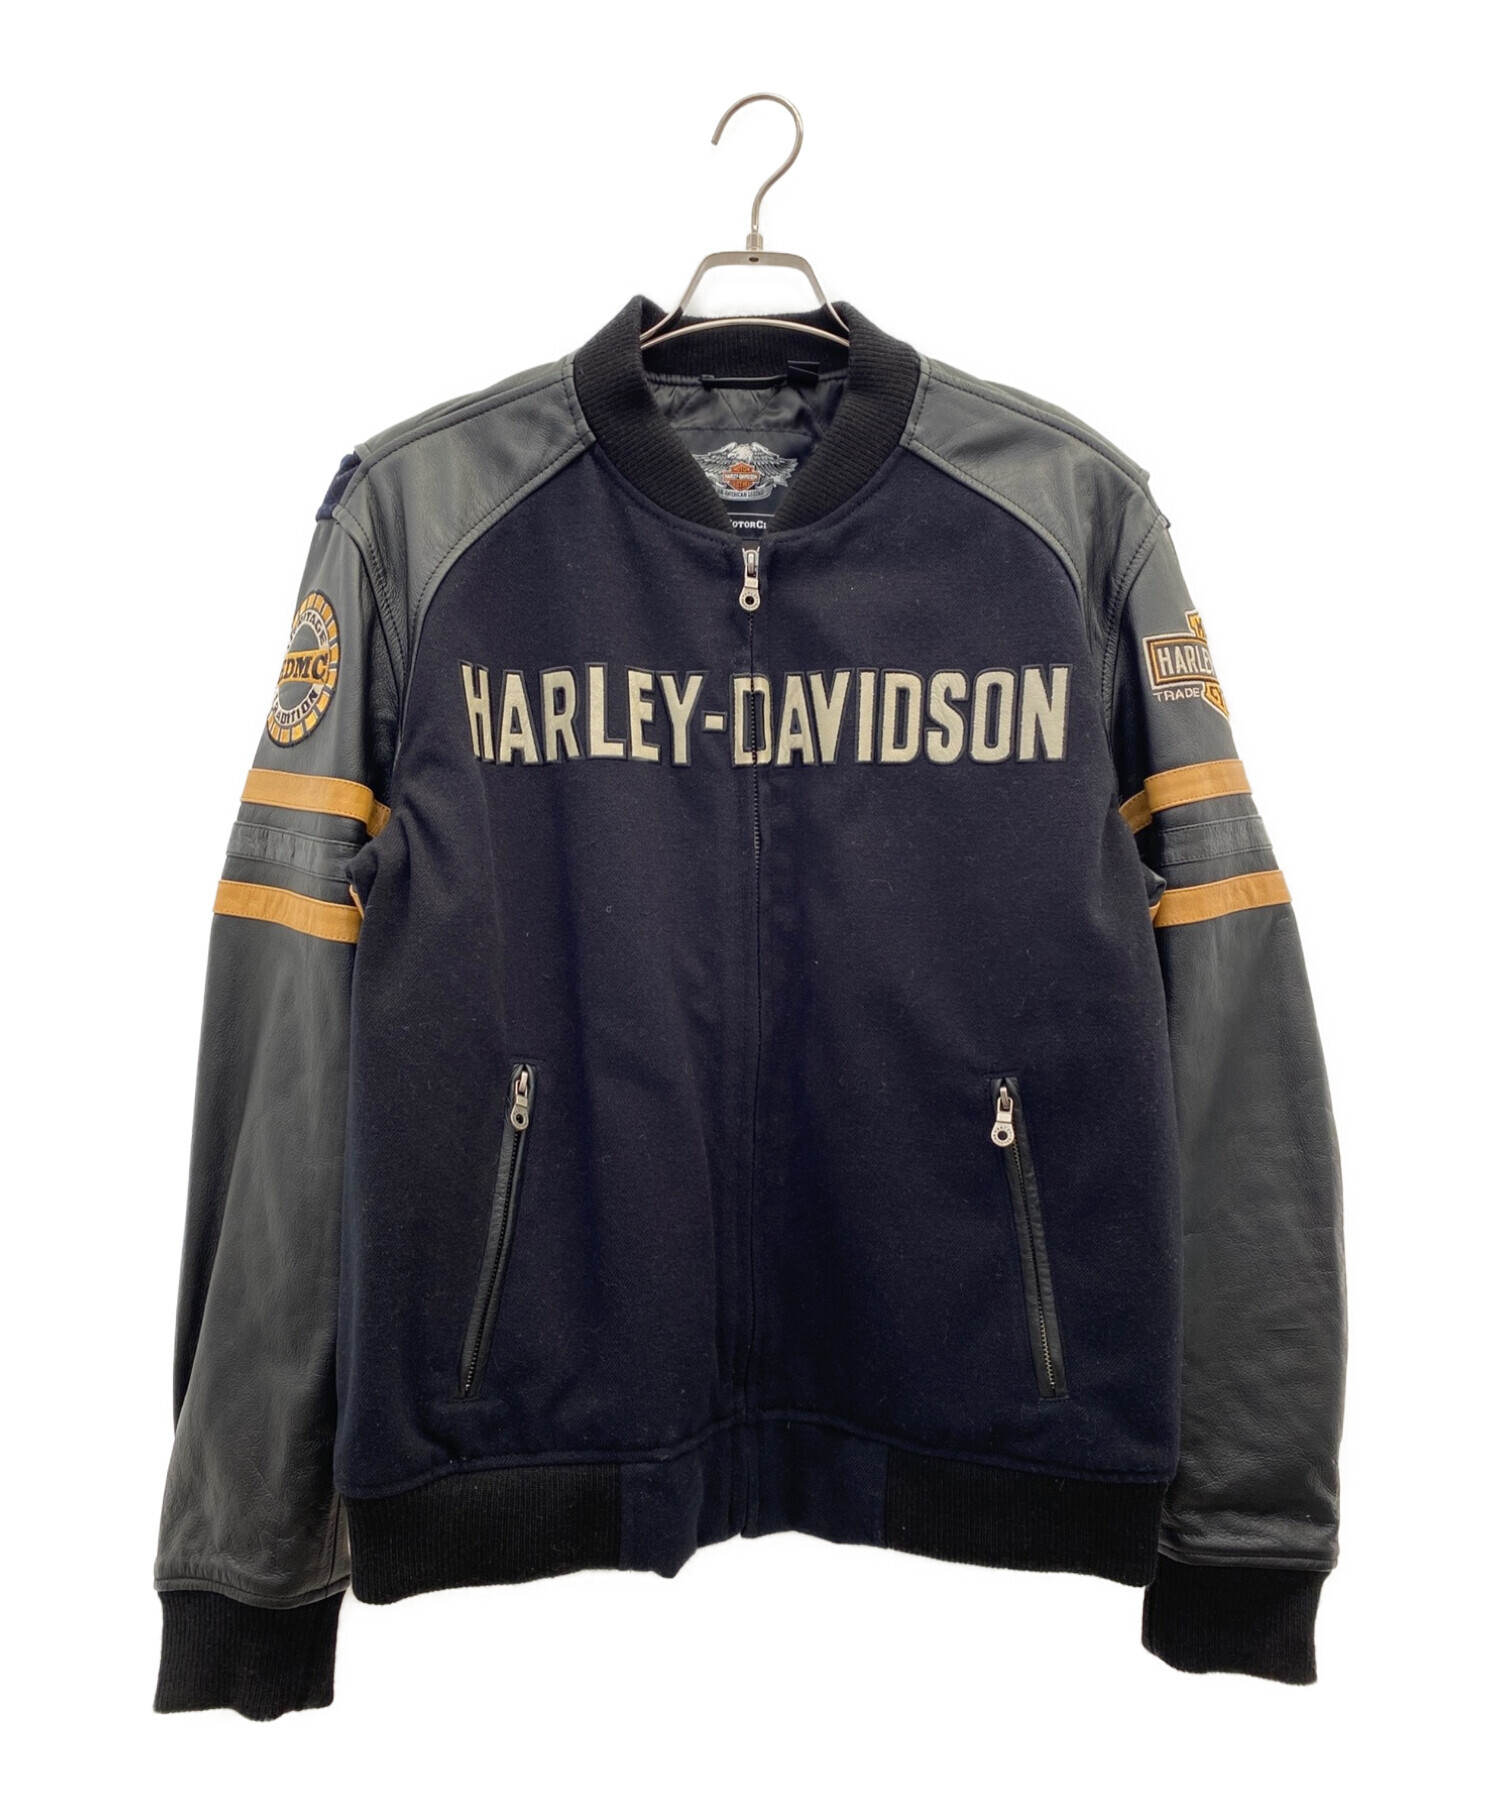 HARLEY-DAVIDSON (ハーレーダビッドソン) ボンバージャケット ブラック×ネイビー サイズ:M